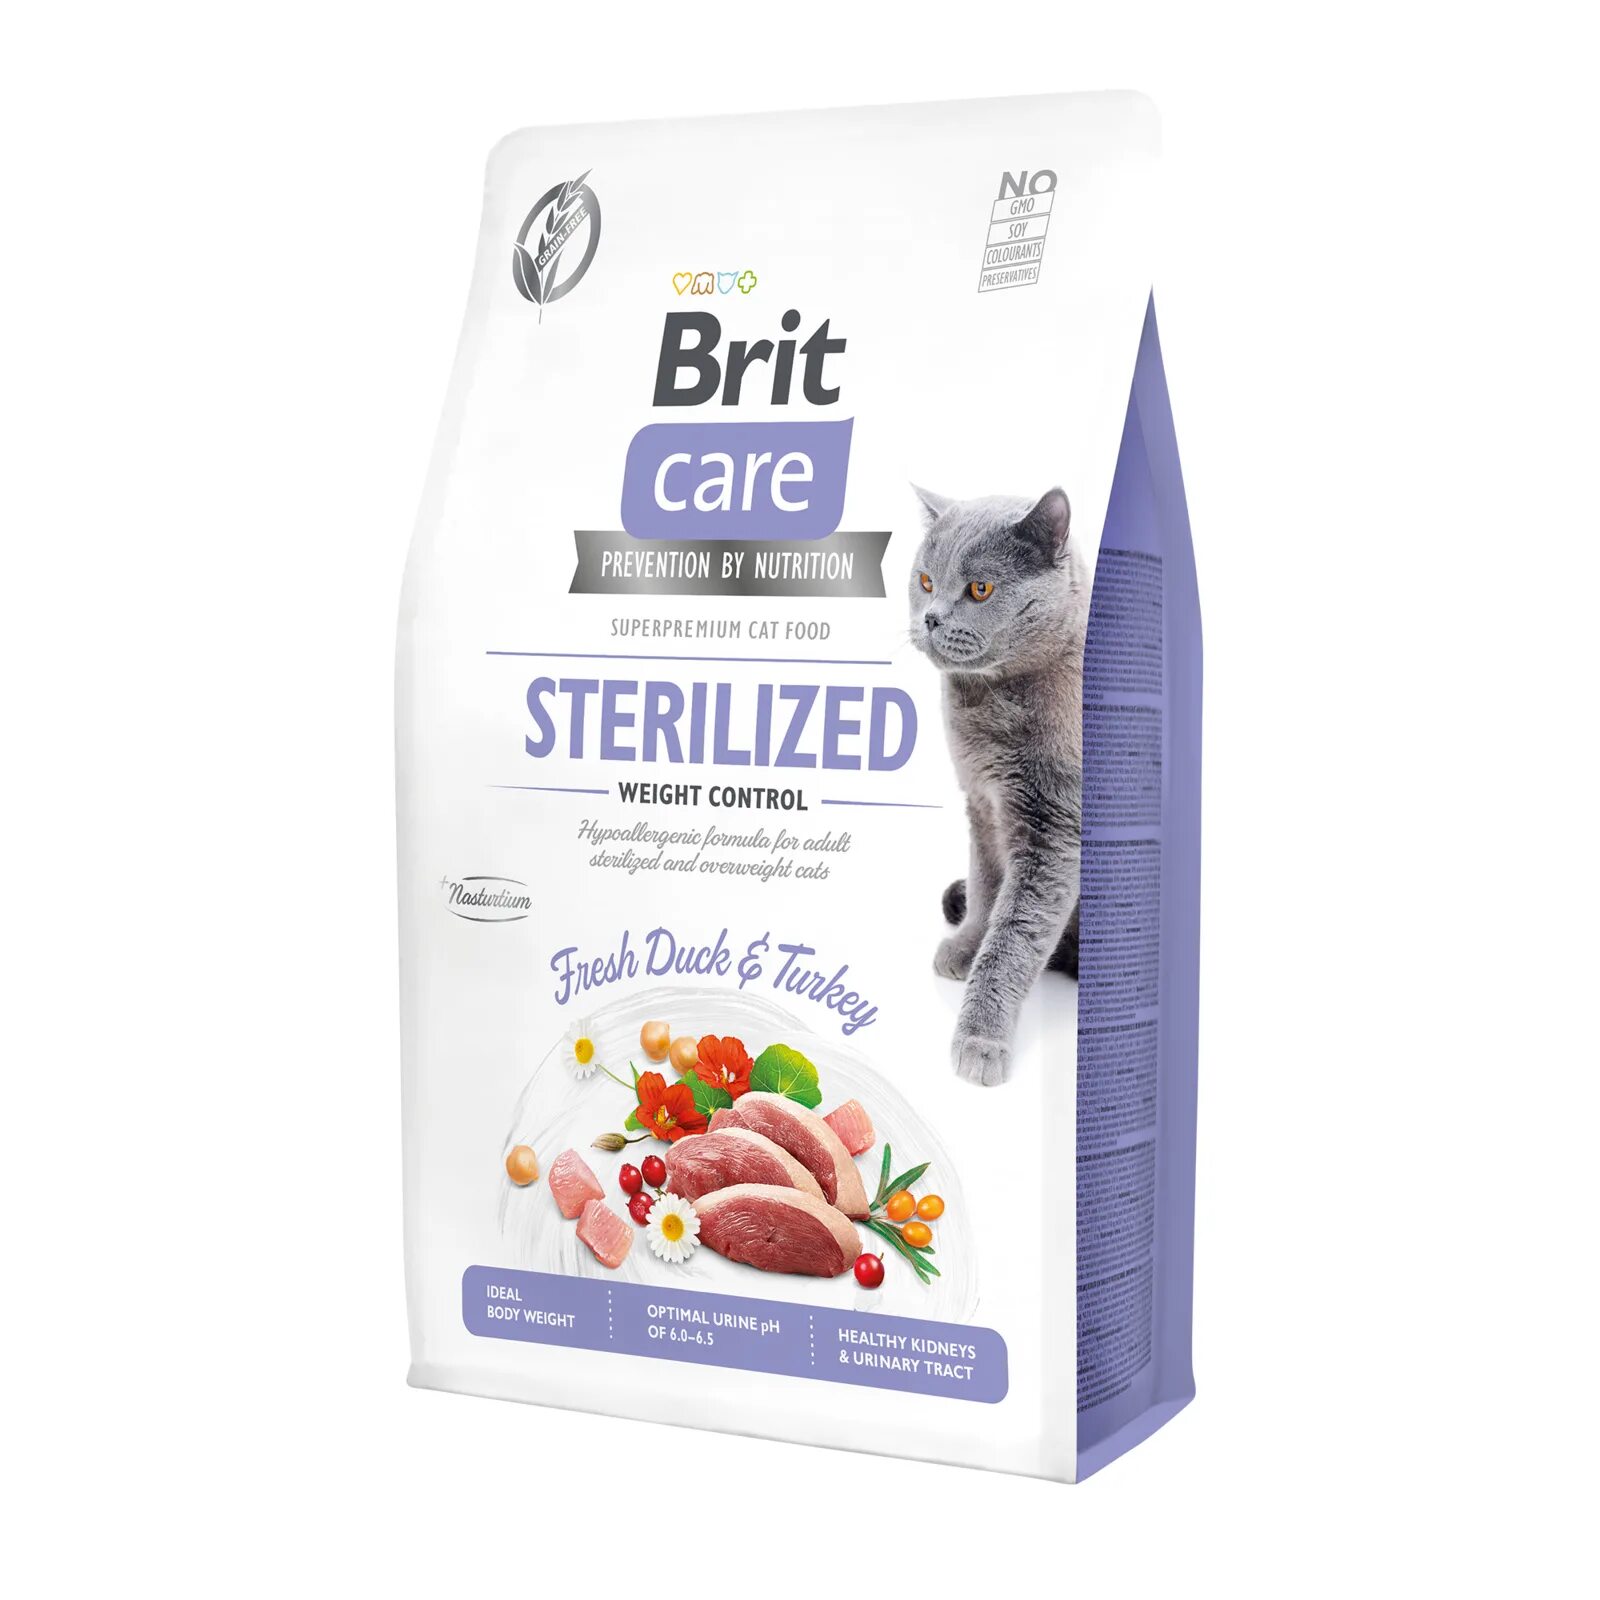 Корм для кошек Brit Care Sterilized. Brit Brit Care Cat gf Sterilized sensitive. Brit Care Cat Missy for Sterilised. Brit Sterilised корм для кошек 400 г.